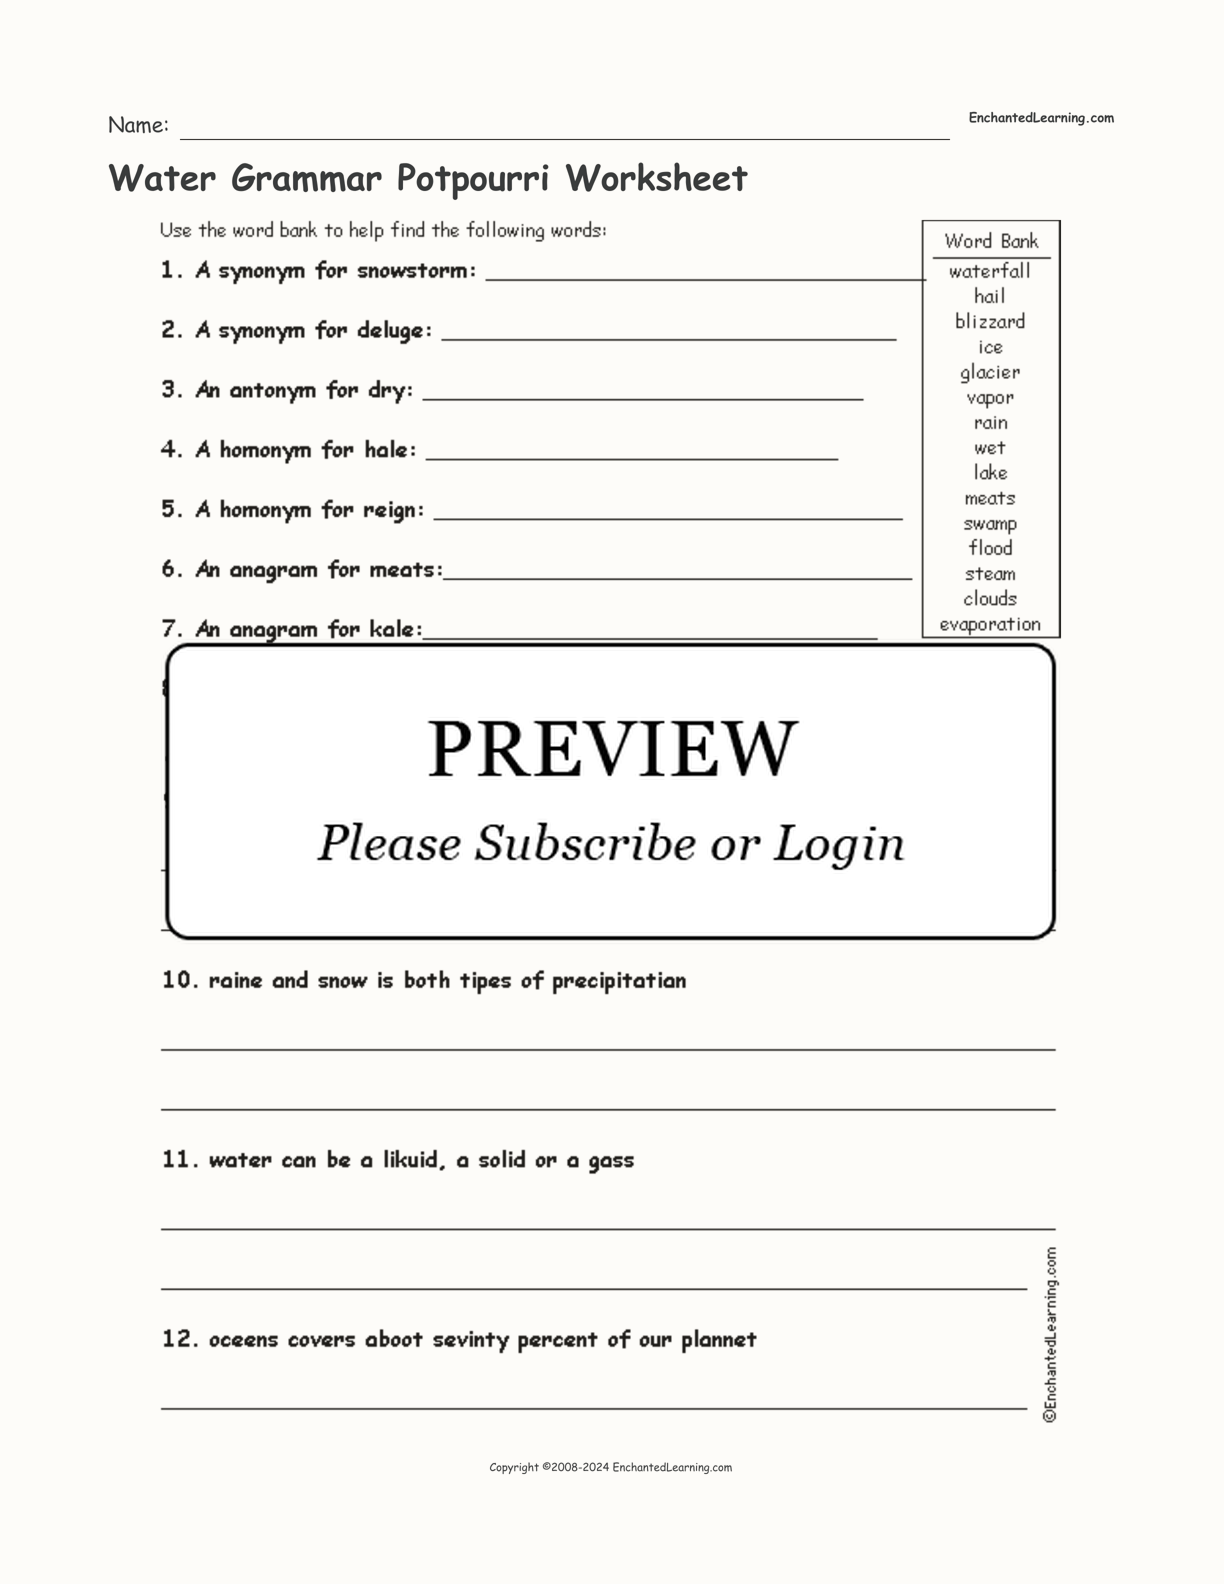 Water Grammar Potpourri Worksheet interactive worksheet page 1